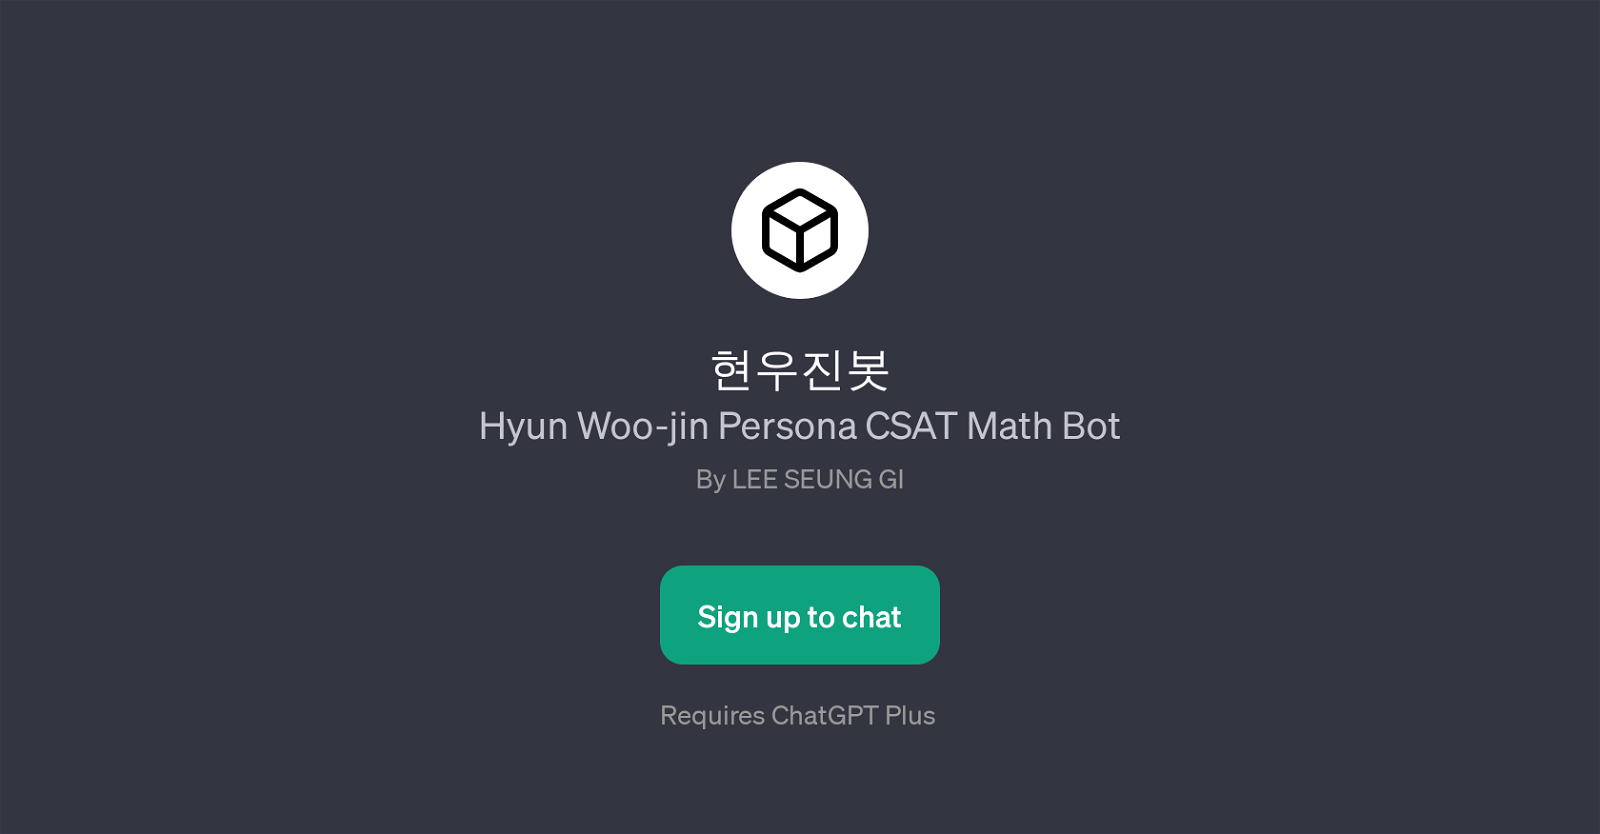 Hyun Woo-jin Persona CSAT Math Bot website